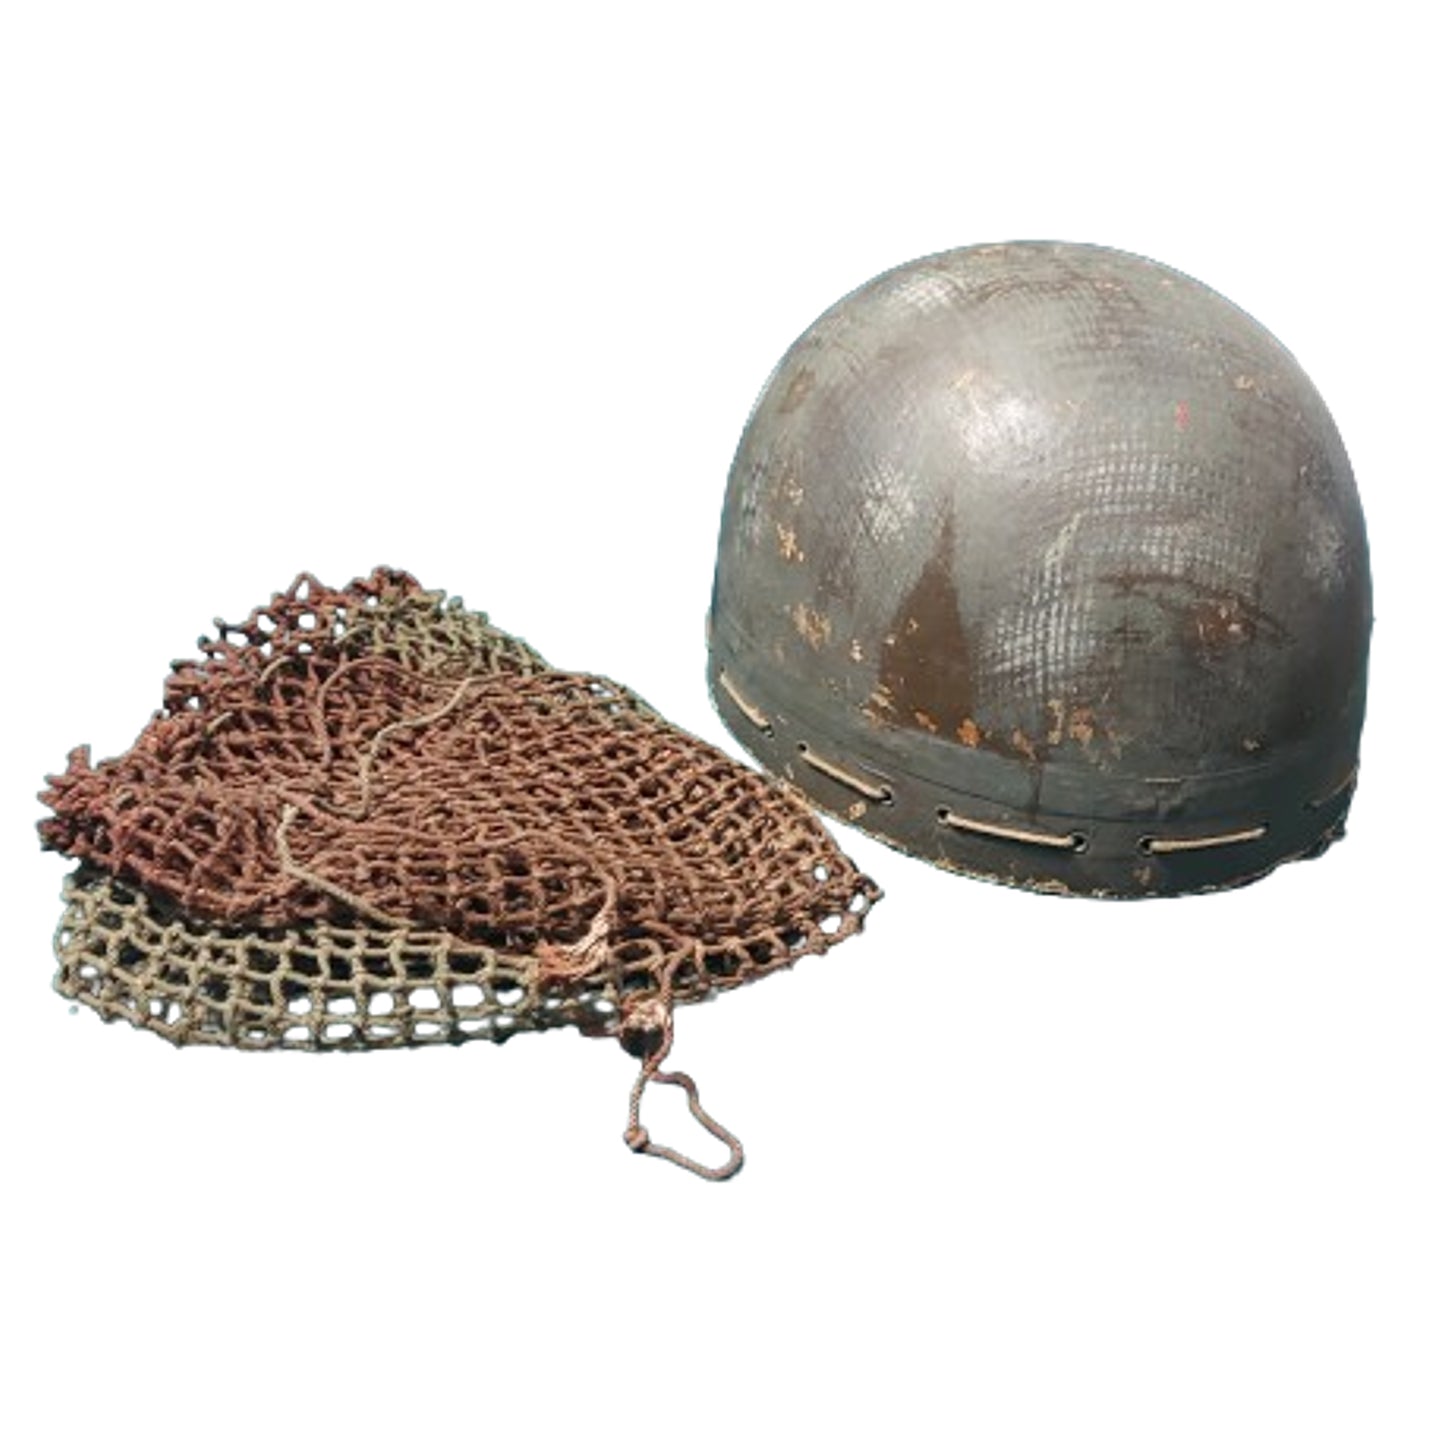 WW2 Canadian British Dispatch Riders Fiber Helmet With Camo Net